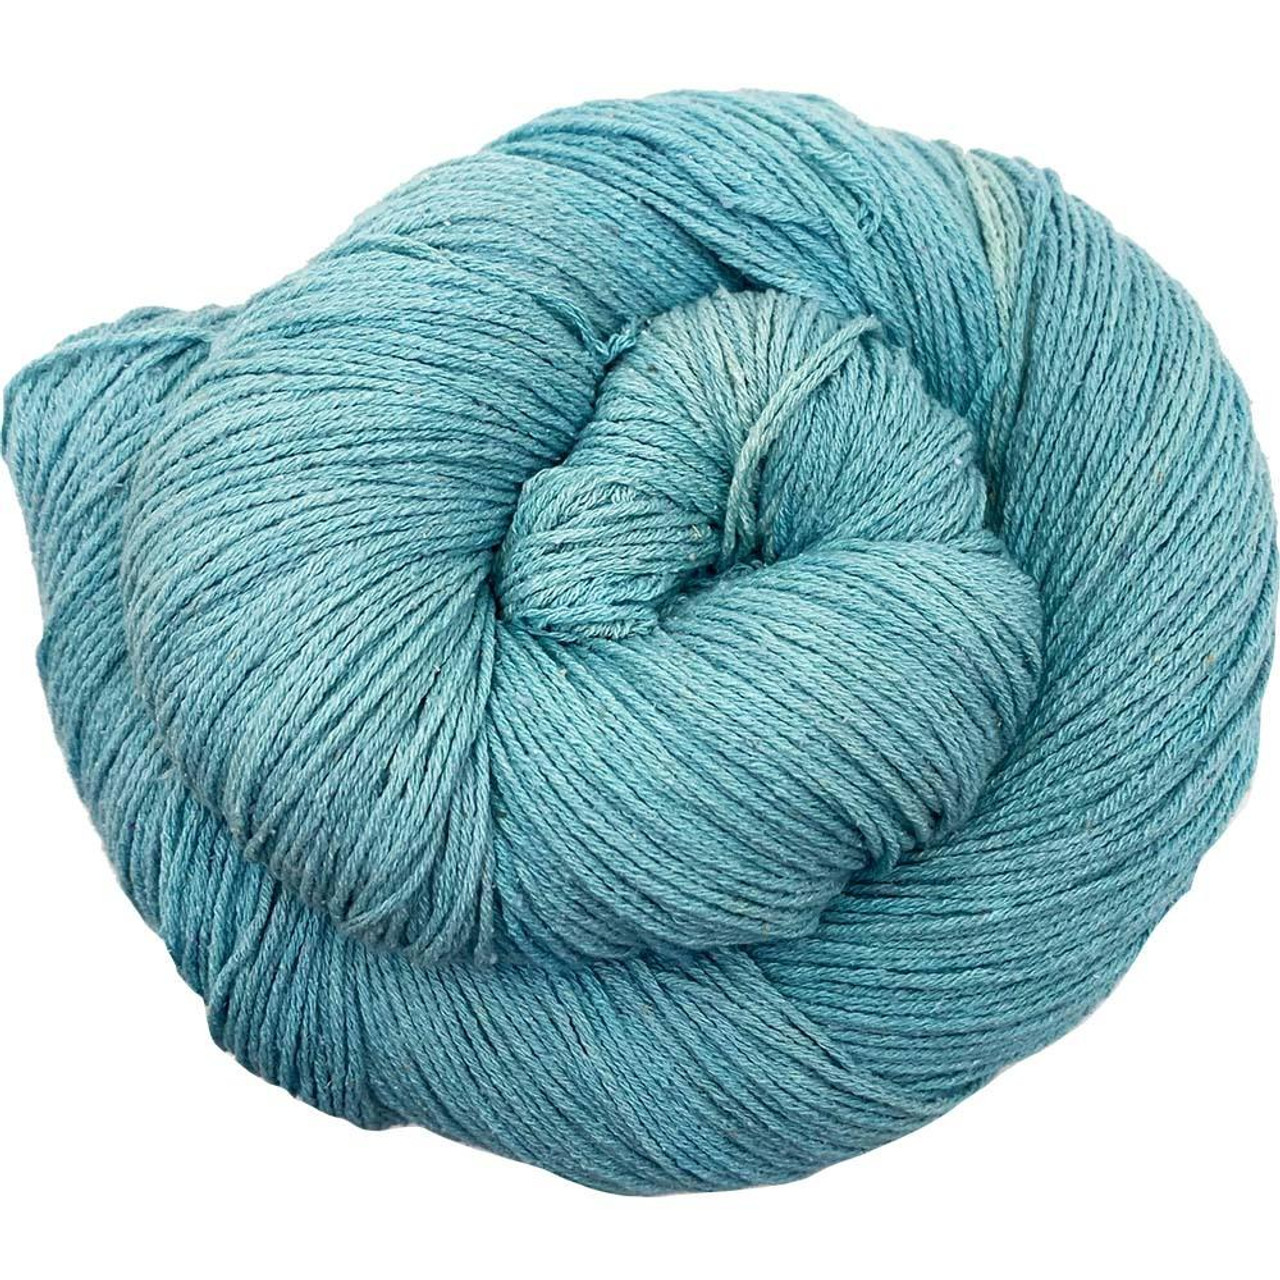  Silk Wool Blend Yarn Singles - Merino Silk Yarn, Sport/dk  Weight, Variegated Yarn, Tonal Yarn, Hand-Dyed, Fair Trade - 100 Grams  (Thames)